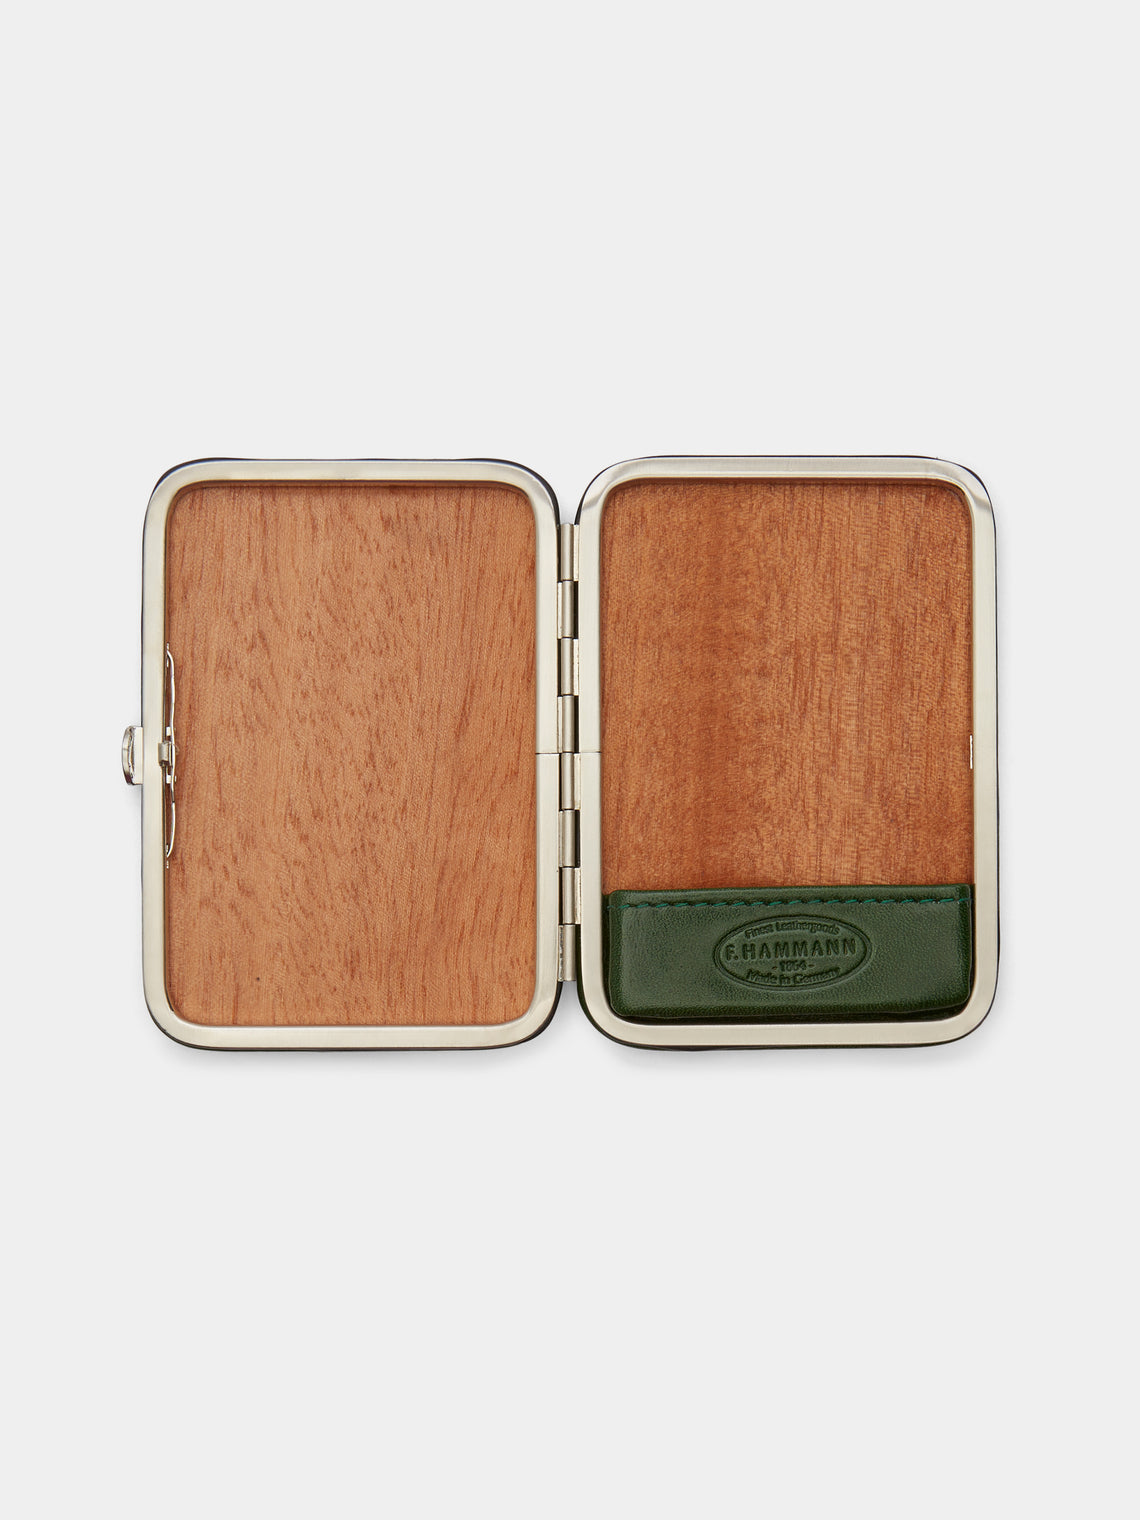 F. Hammann - Leather Cigarette Case - Green - ABASK